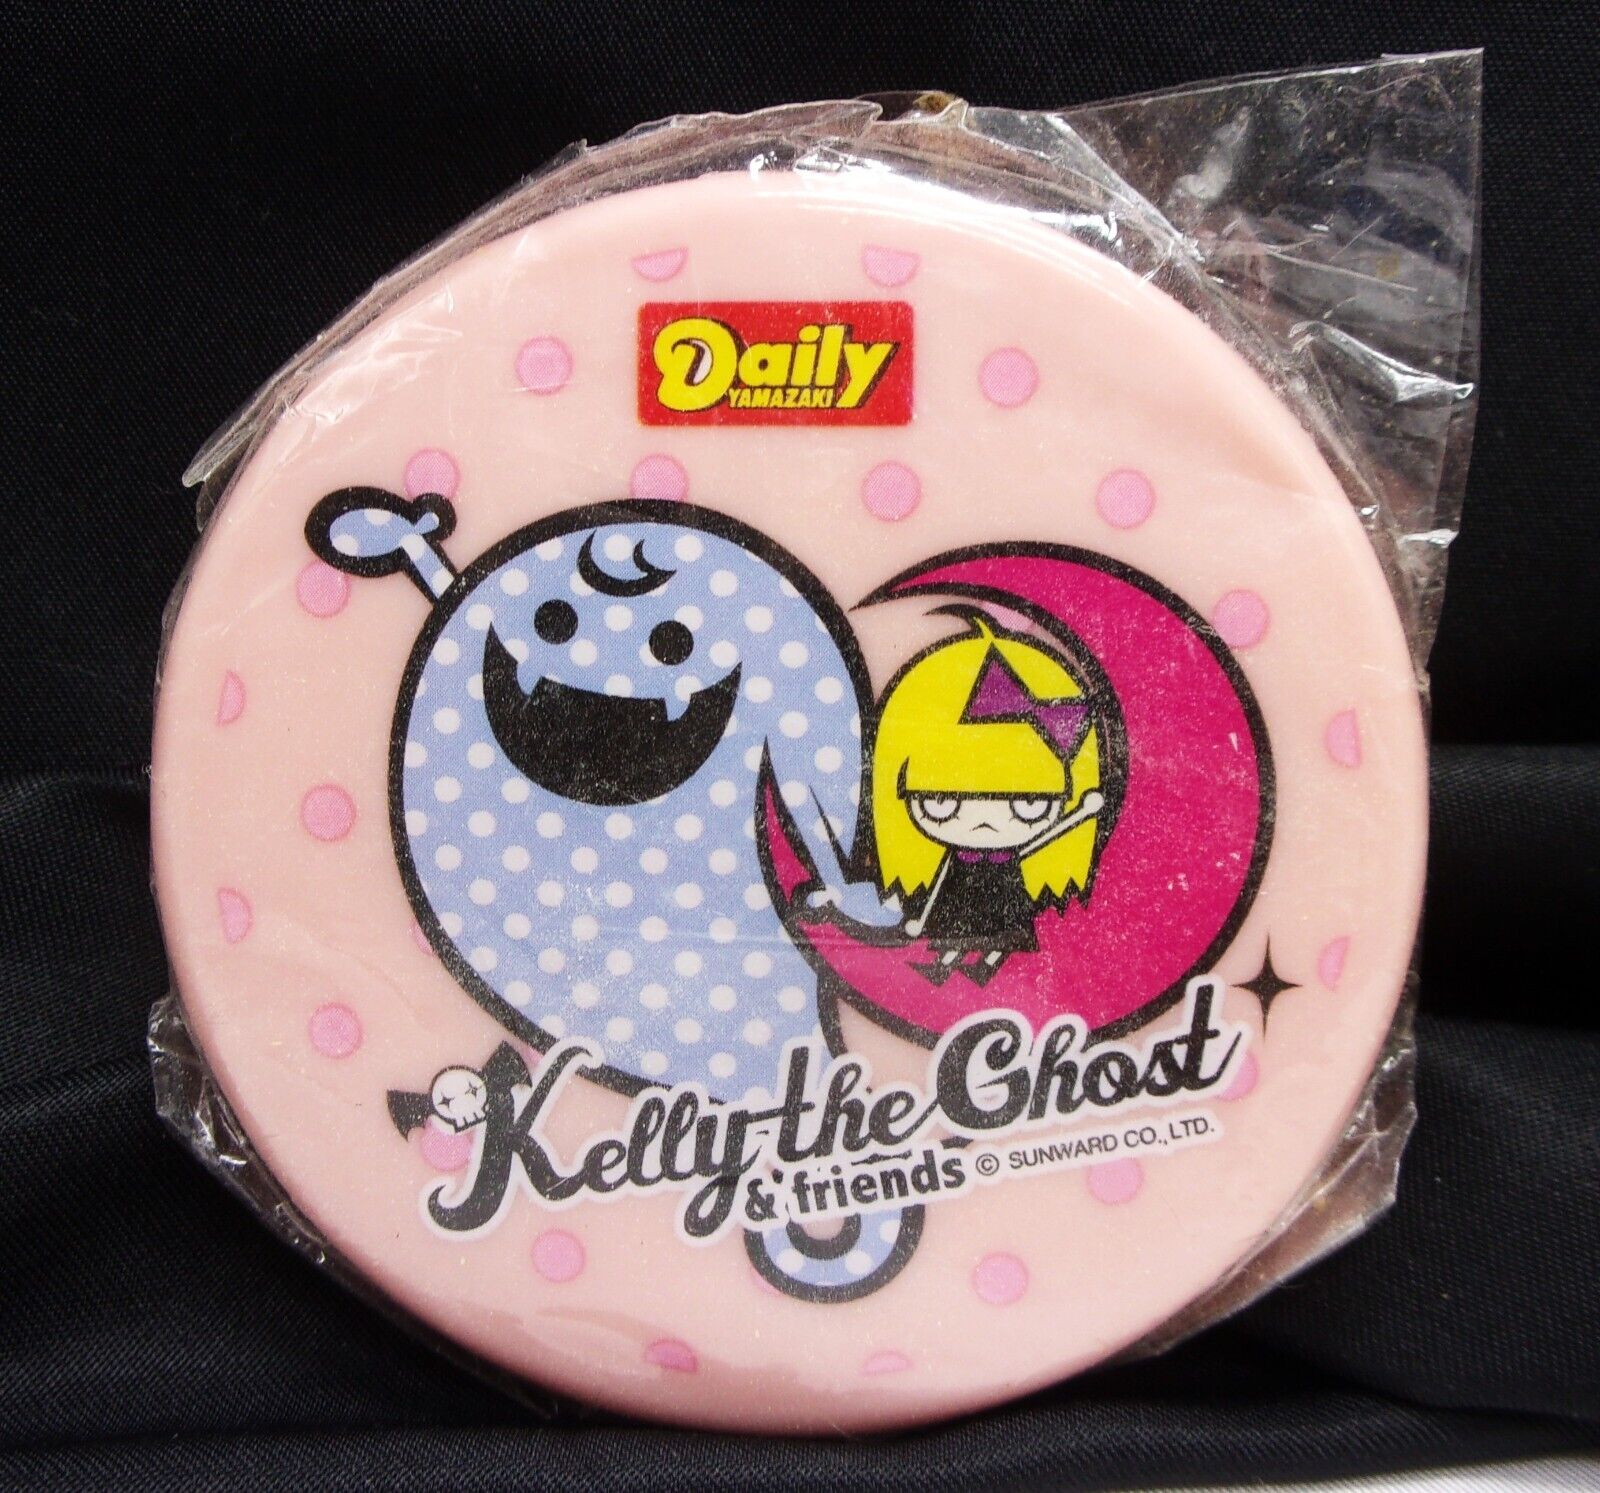 RARE Kelly the Ghost & Friends Original Compact Mirror - Daily Yamazaki - Japan